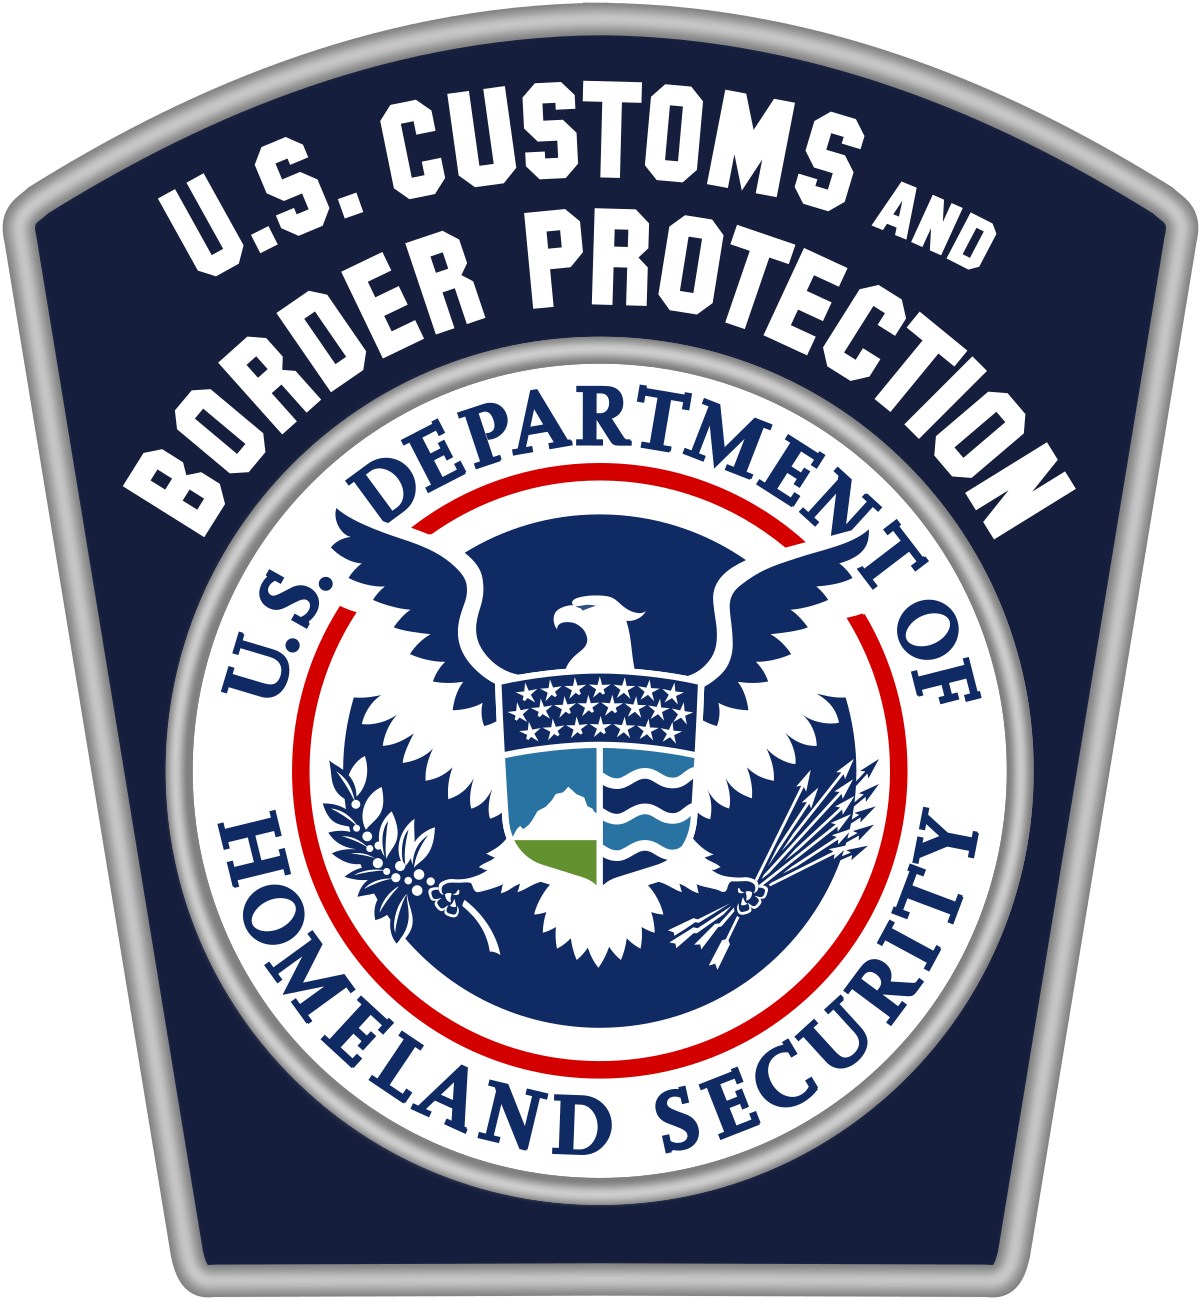 Customs and Border Patrol Logo - U.S. Customs and Border Protection